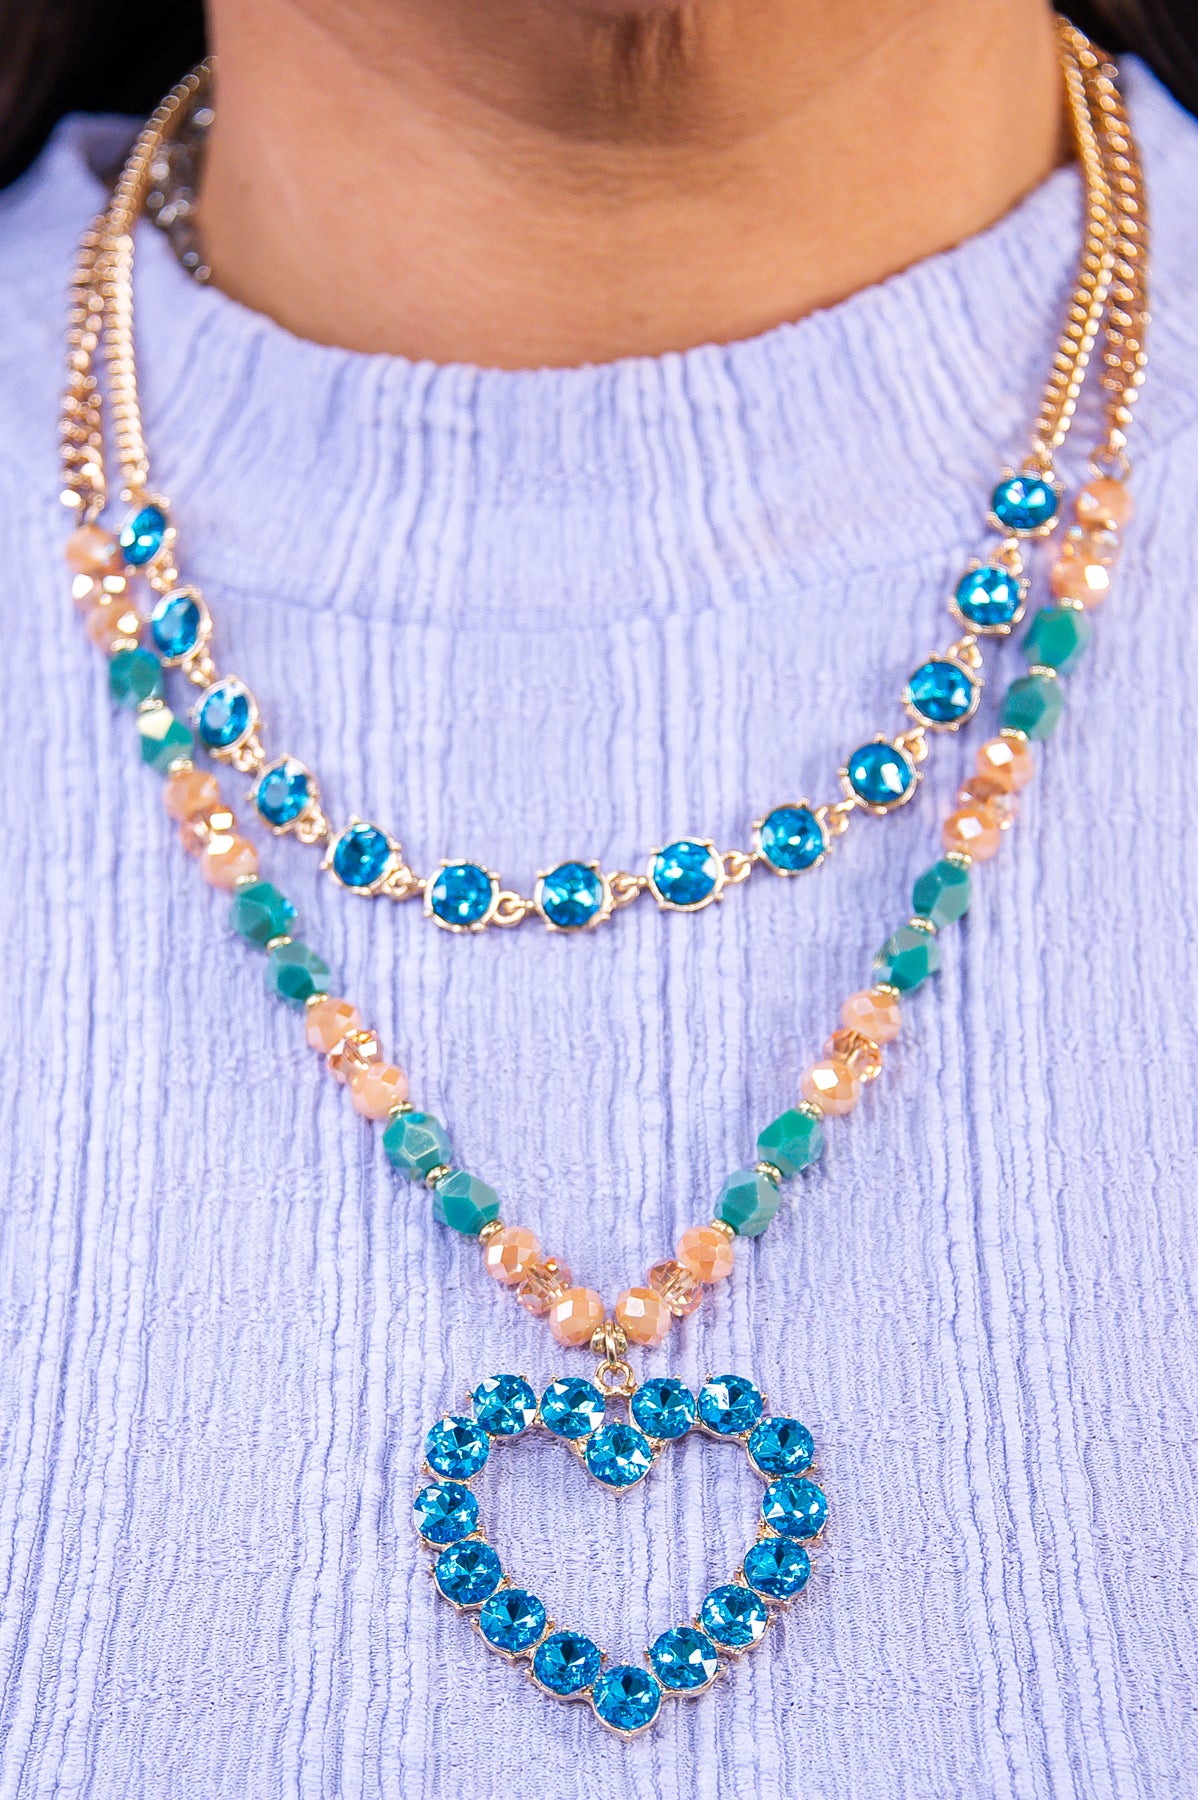 Turquoise/Gold Layered Bling Heart Necklace - NEK4323TU